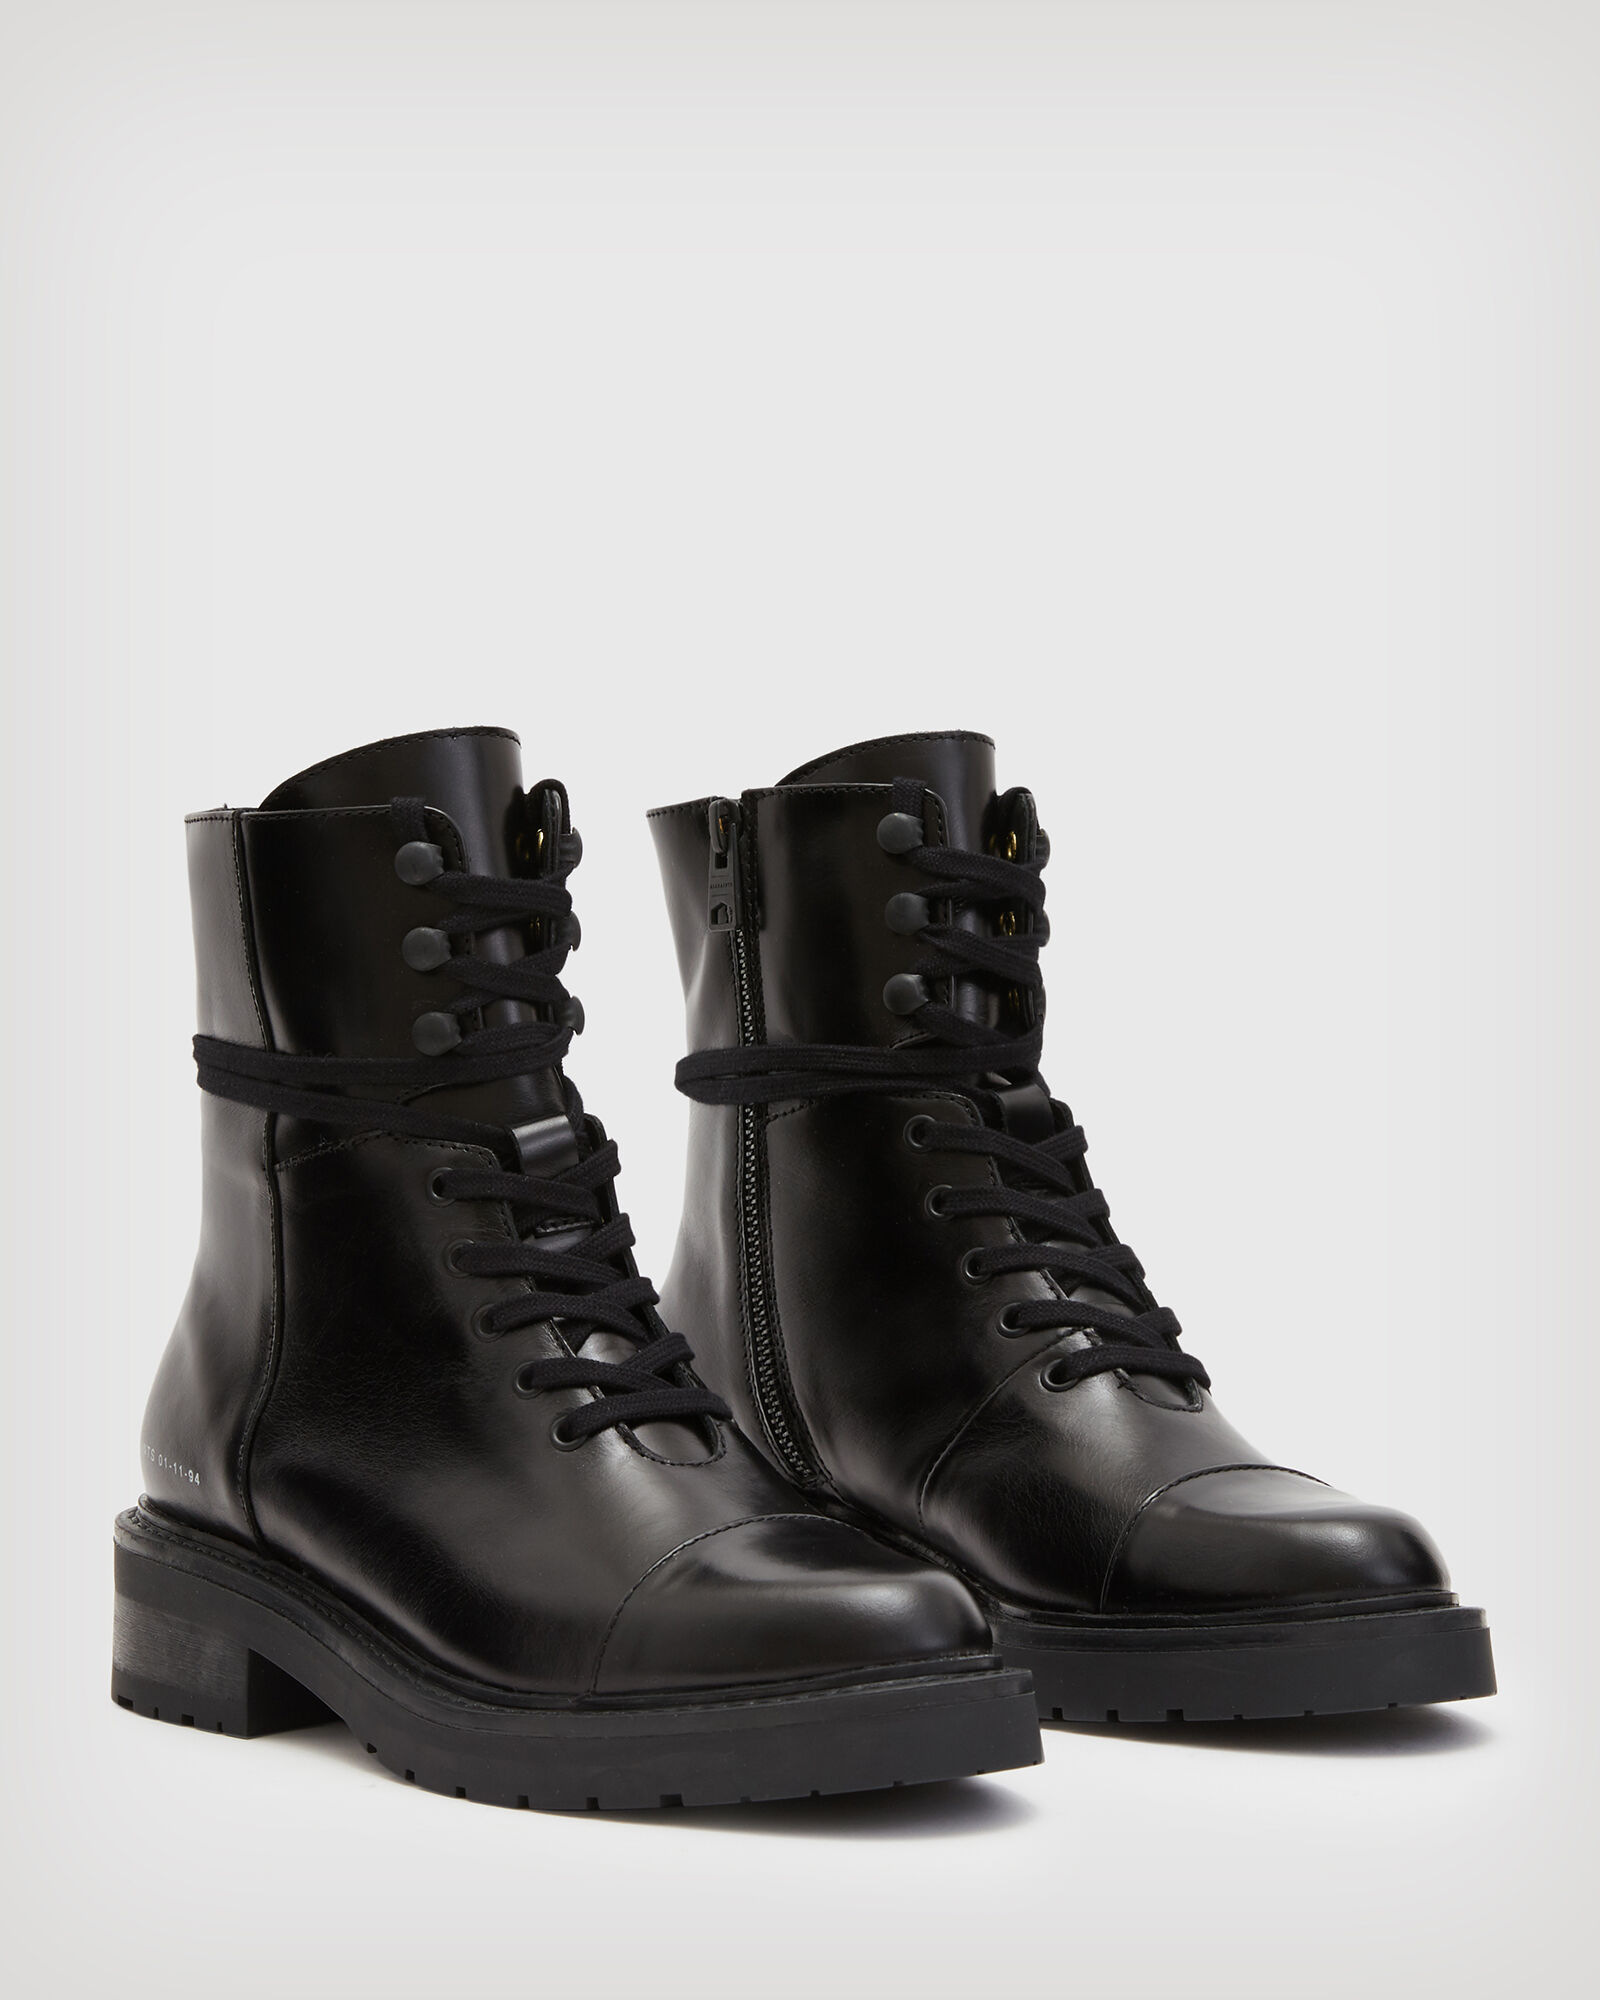 Dusty Leather Boots Black | ALLSAINTS US